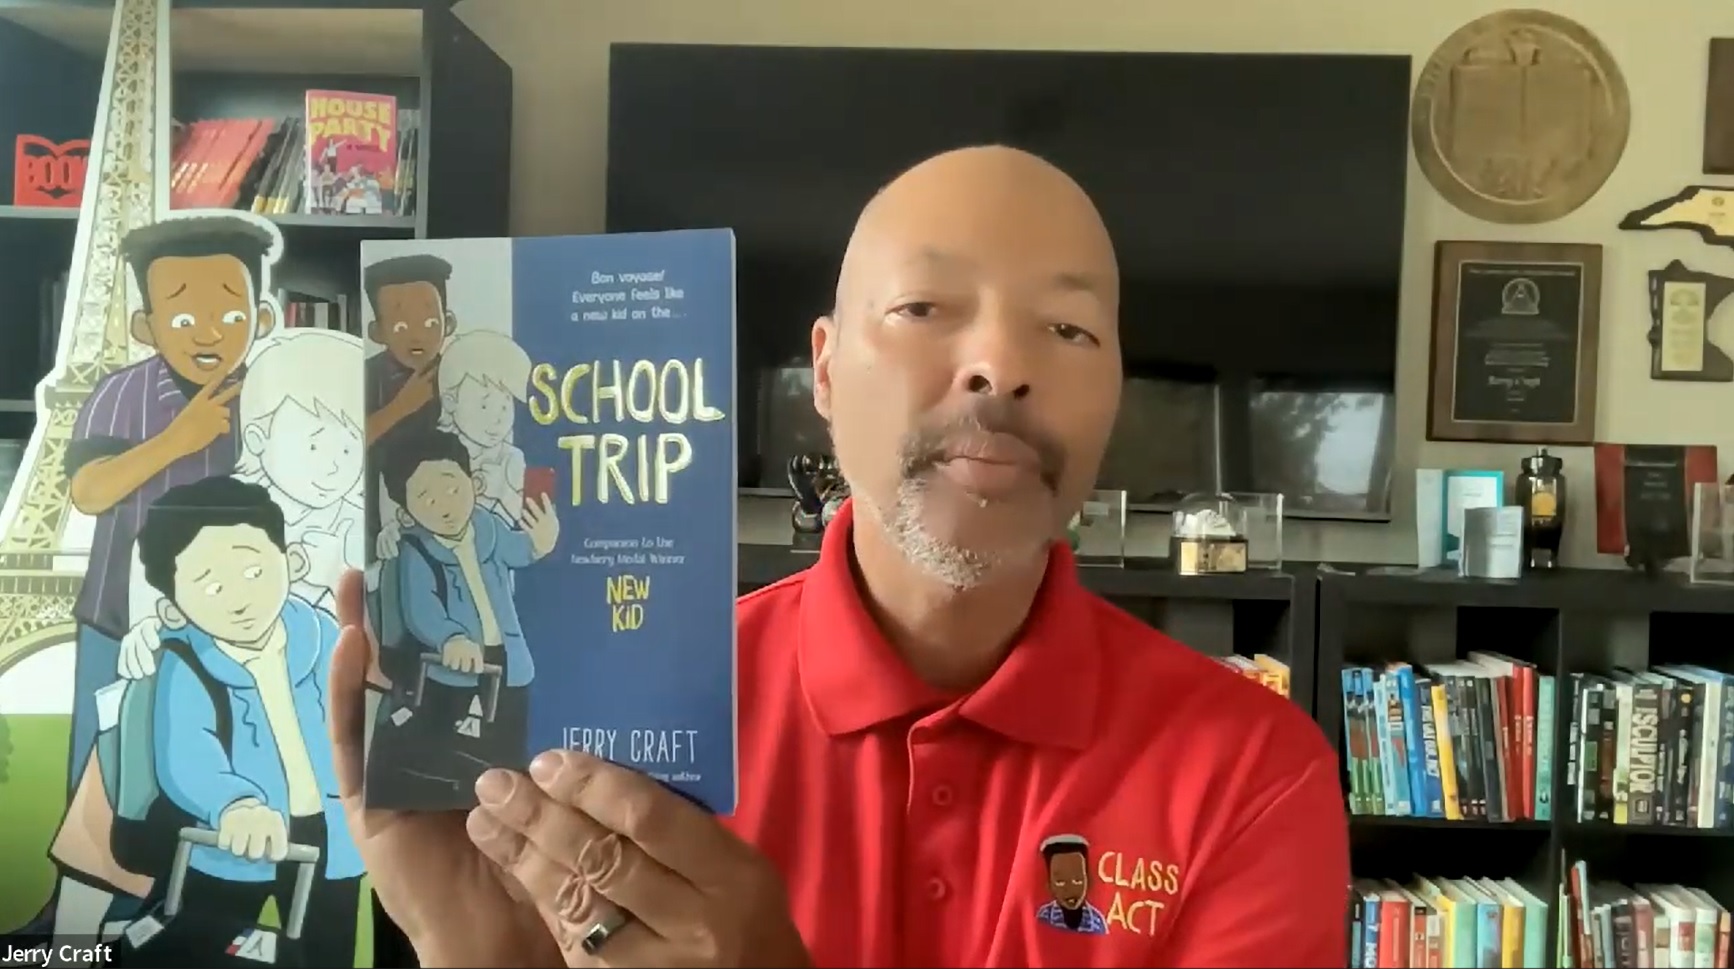 Jerry Craft's latest graphic novel, School Trip